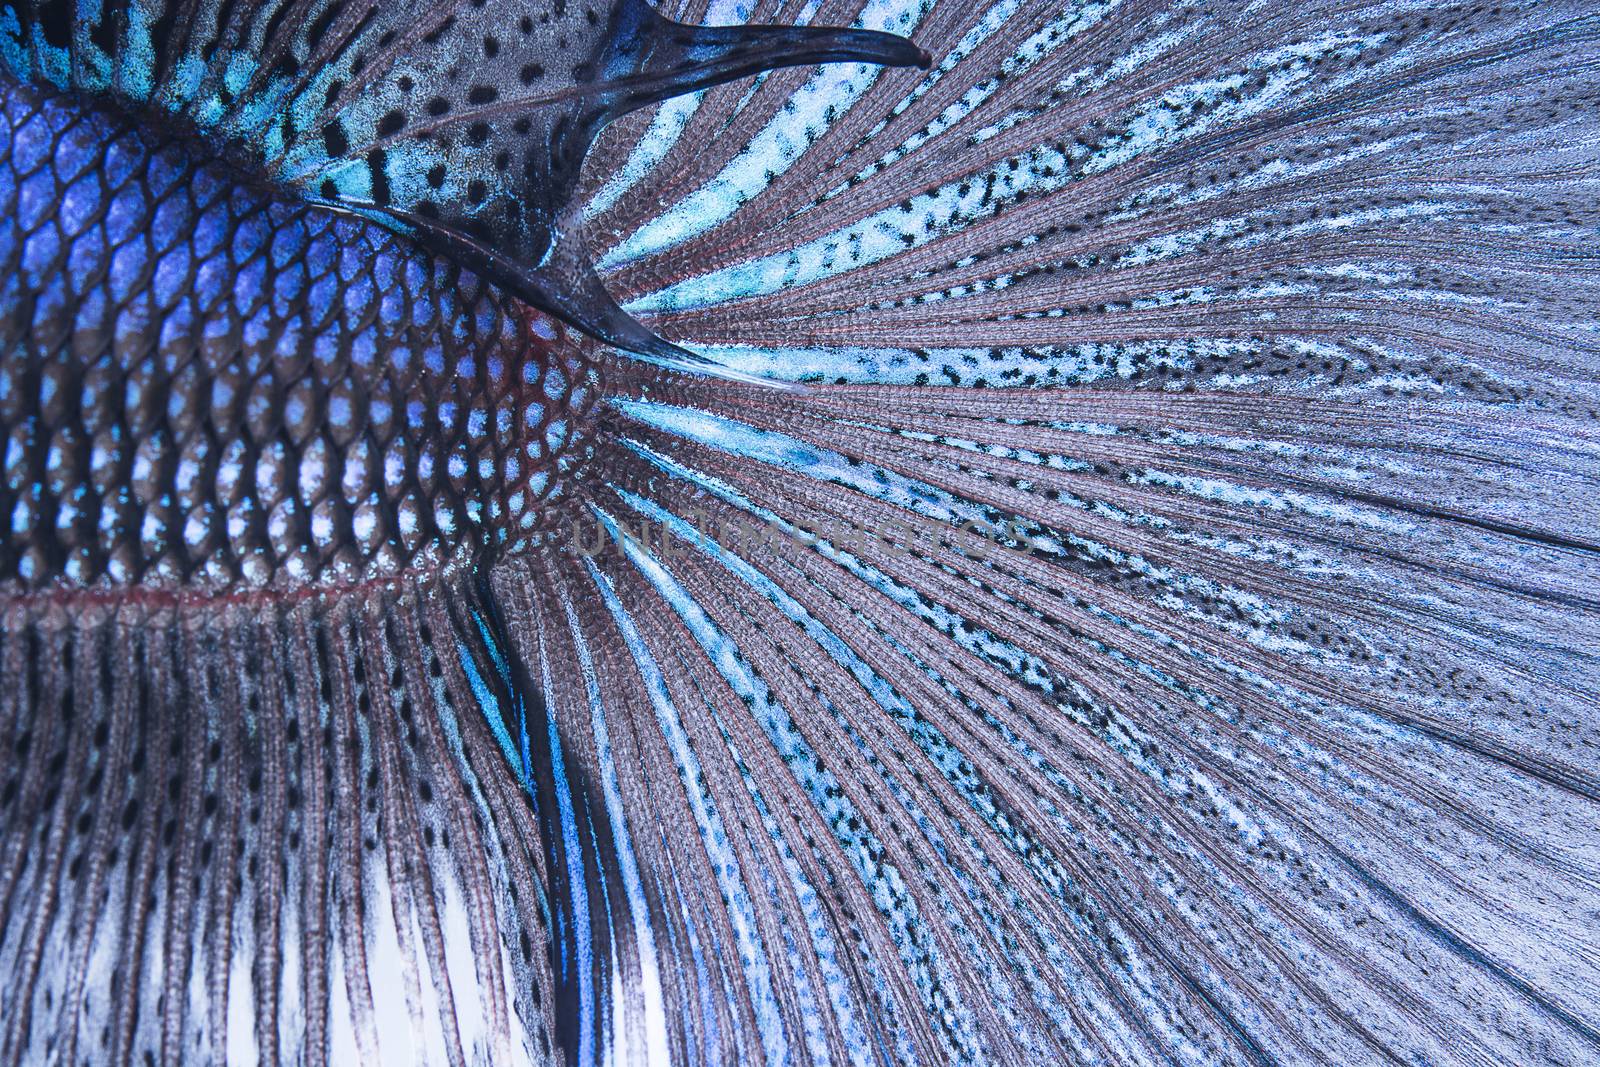 betta tail fish abstract by panuruangjan